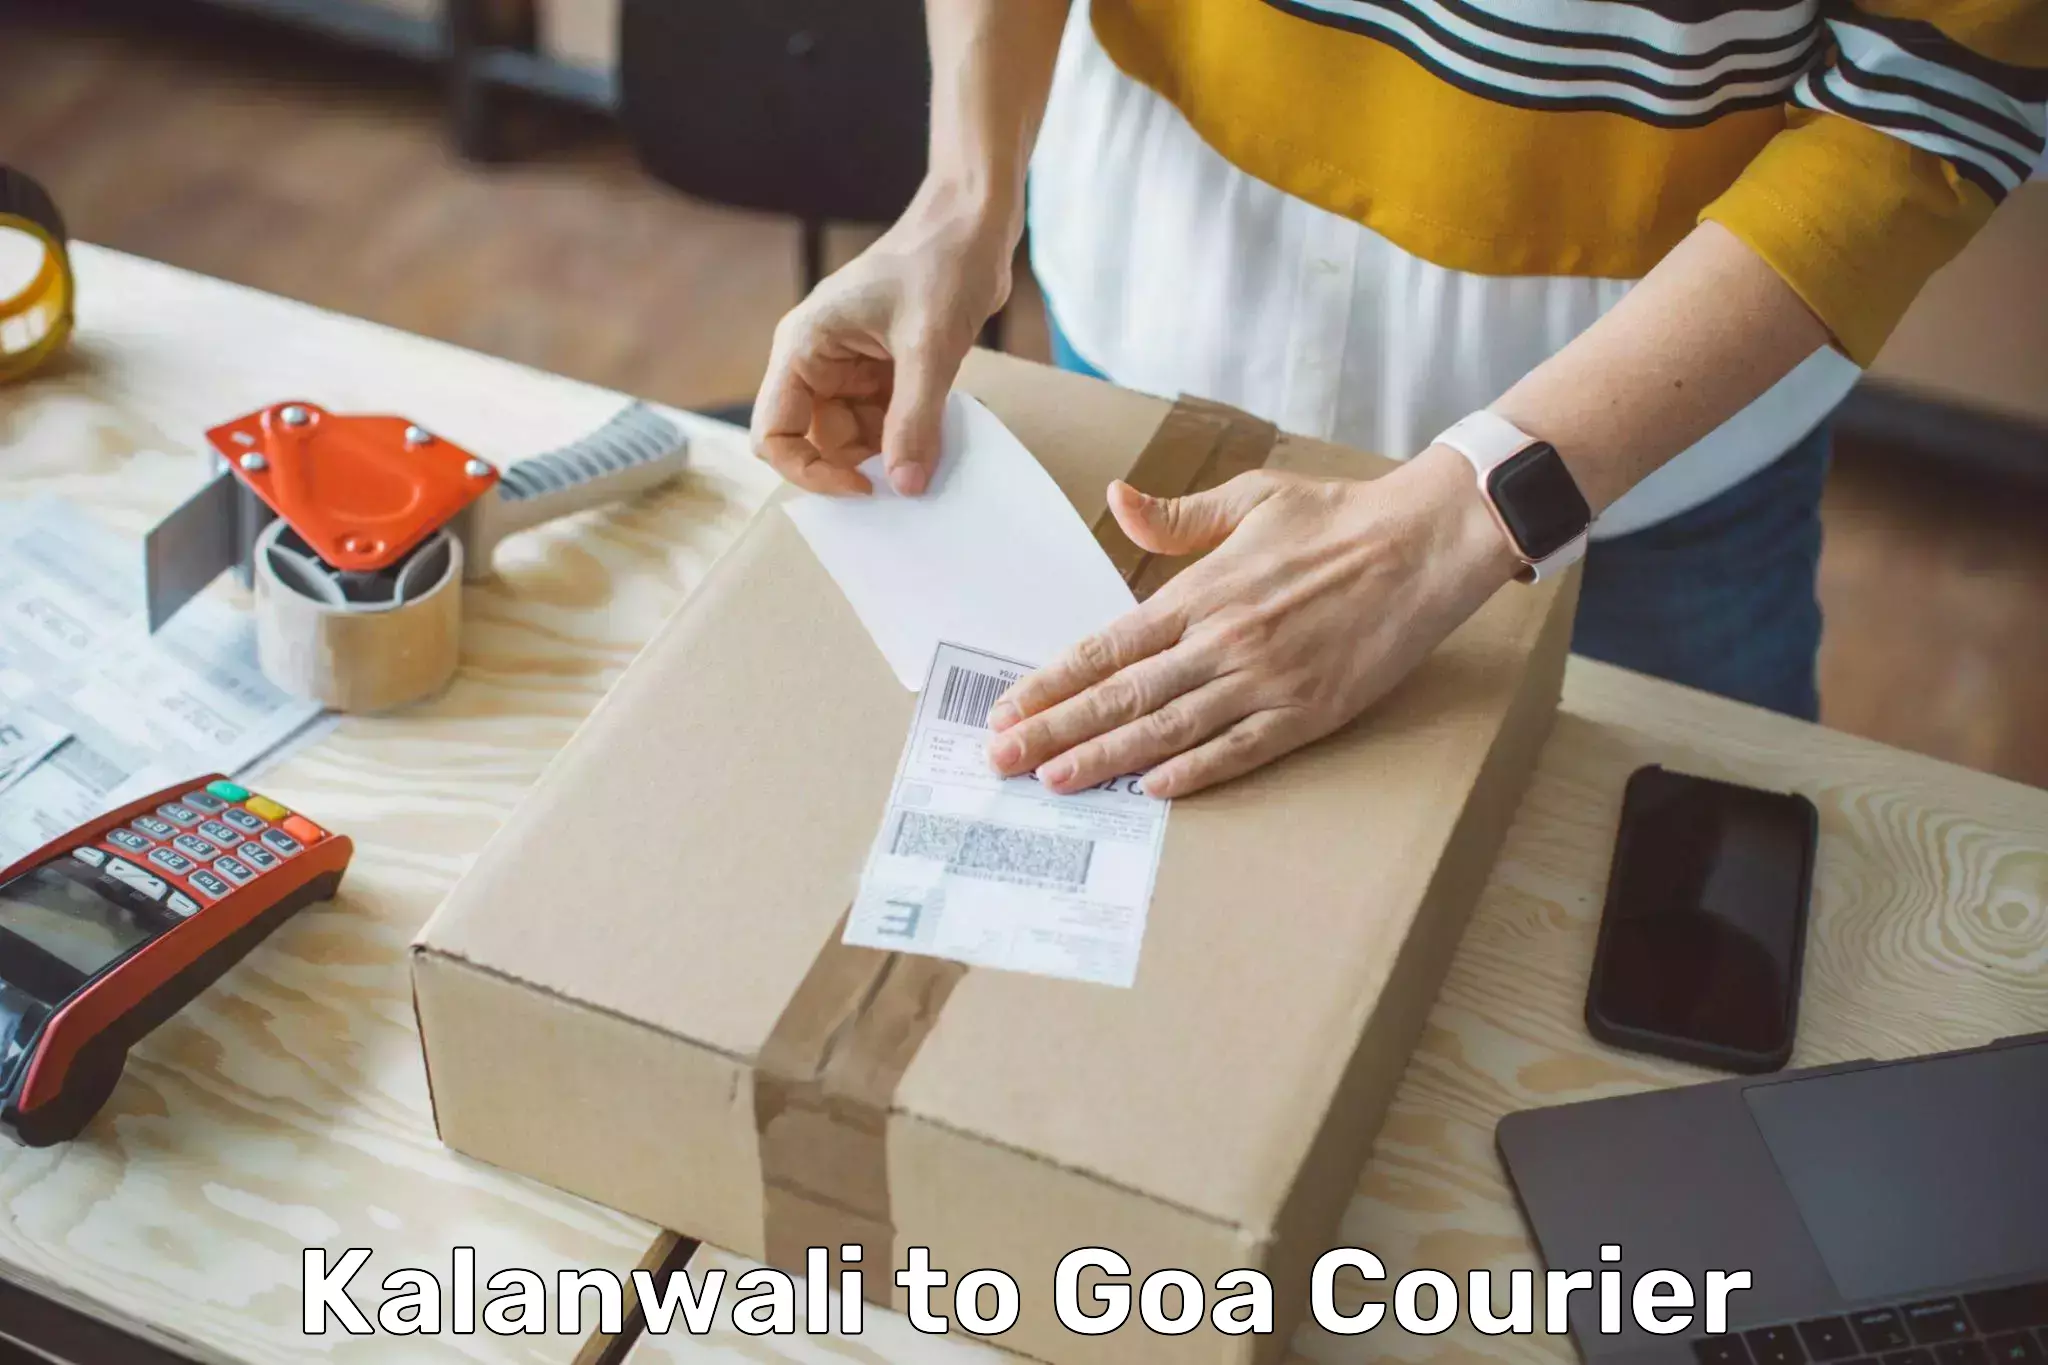 Courier service partnerships Kalanwali to Goa